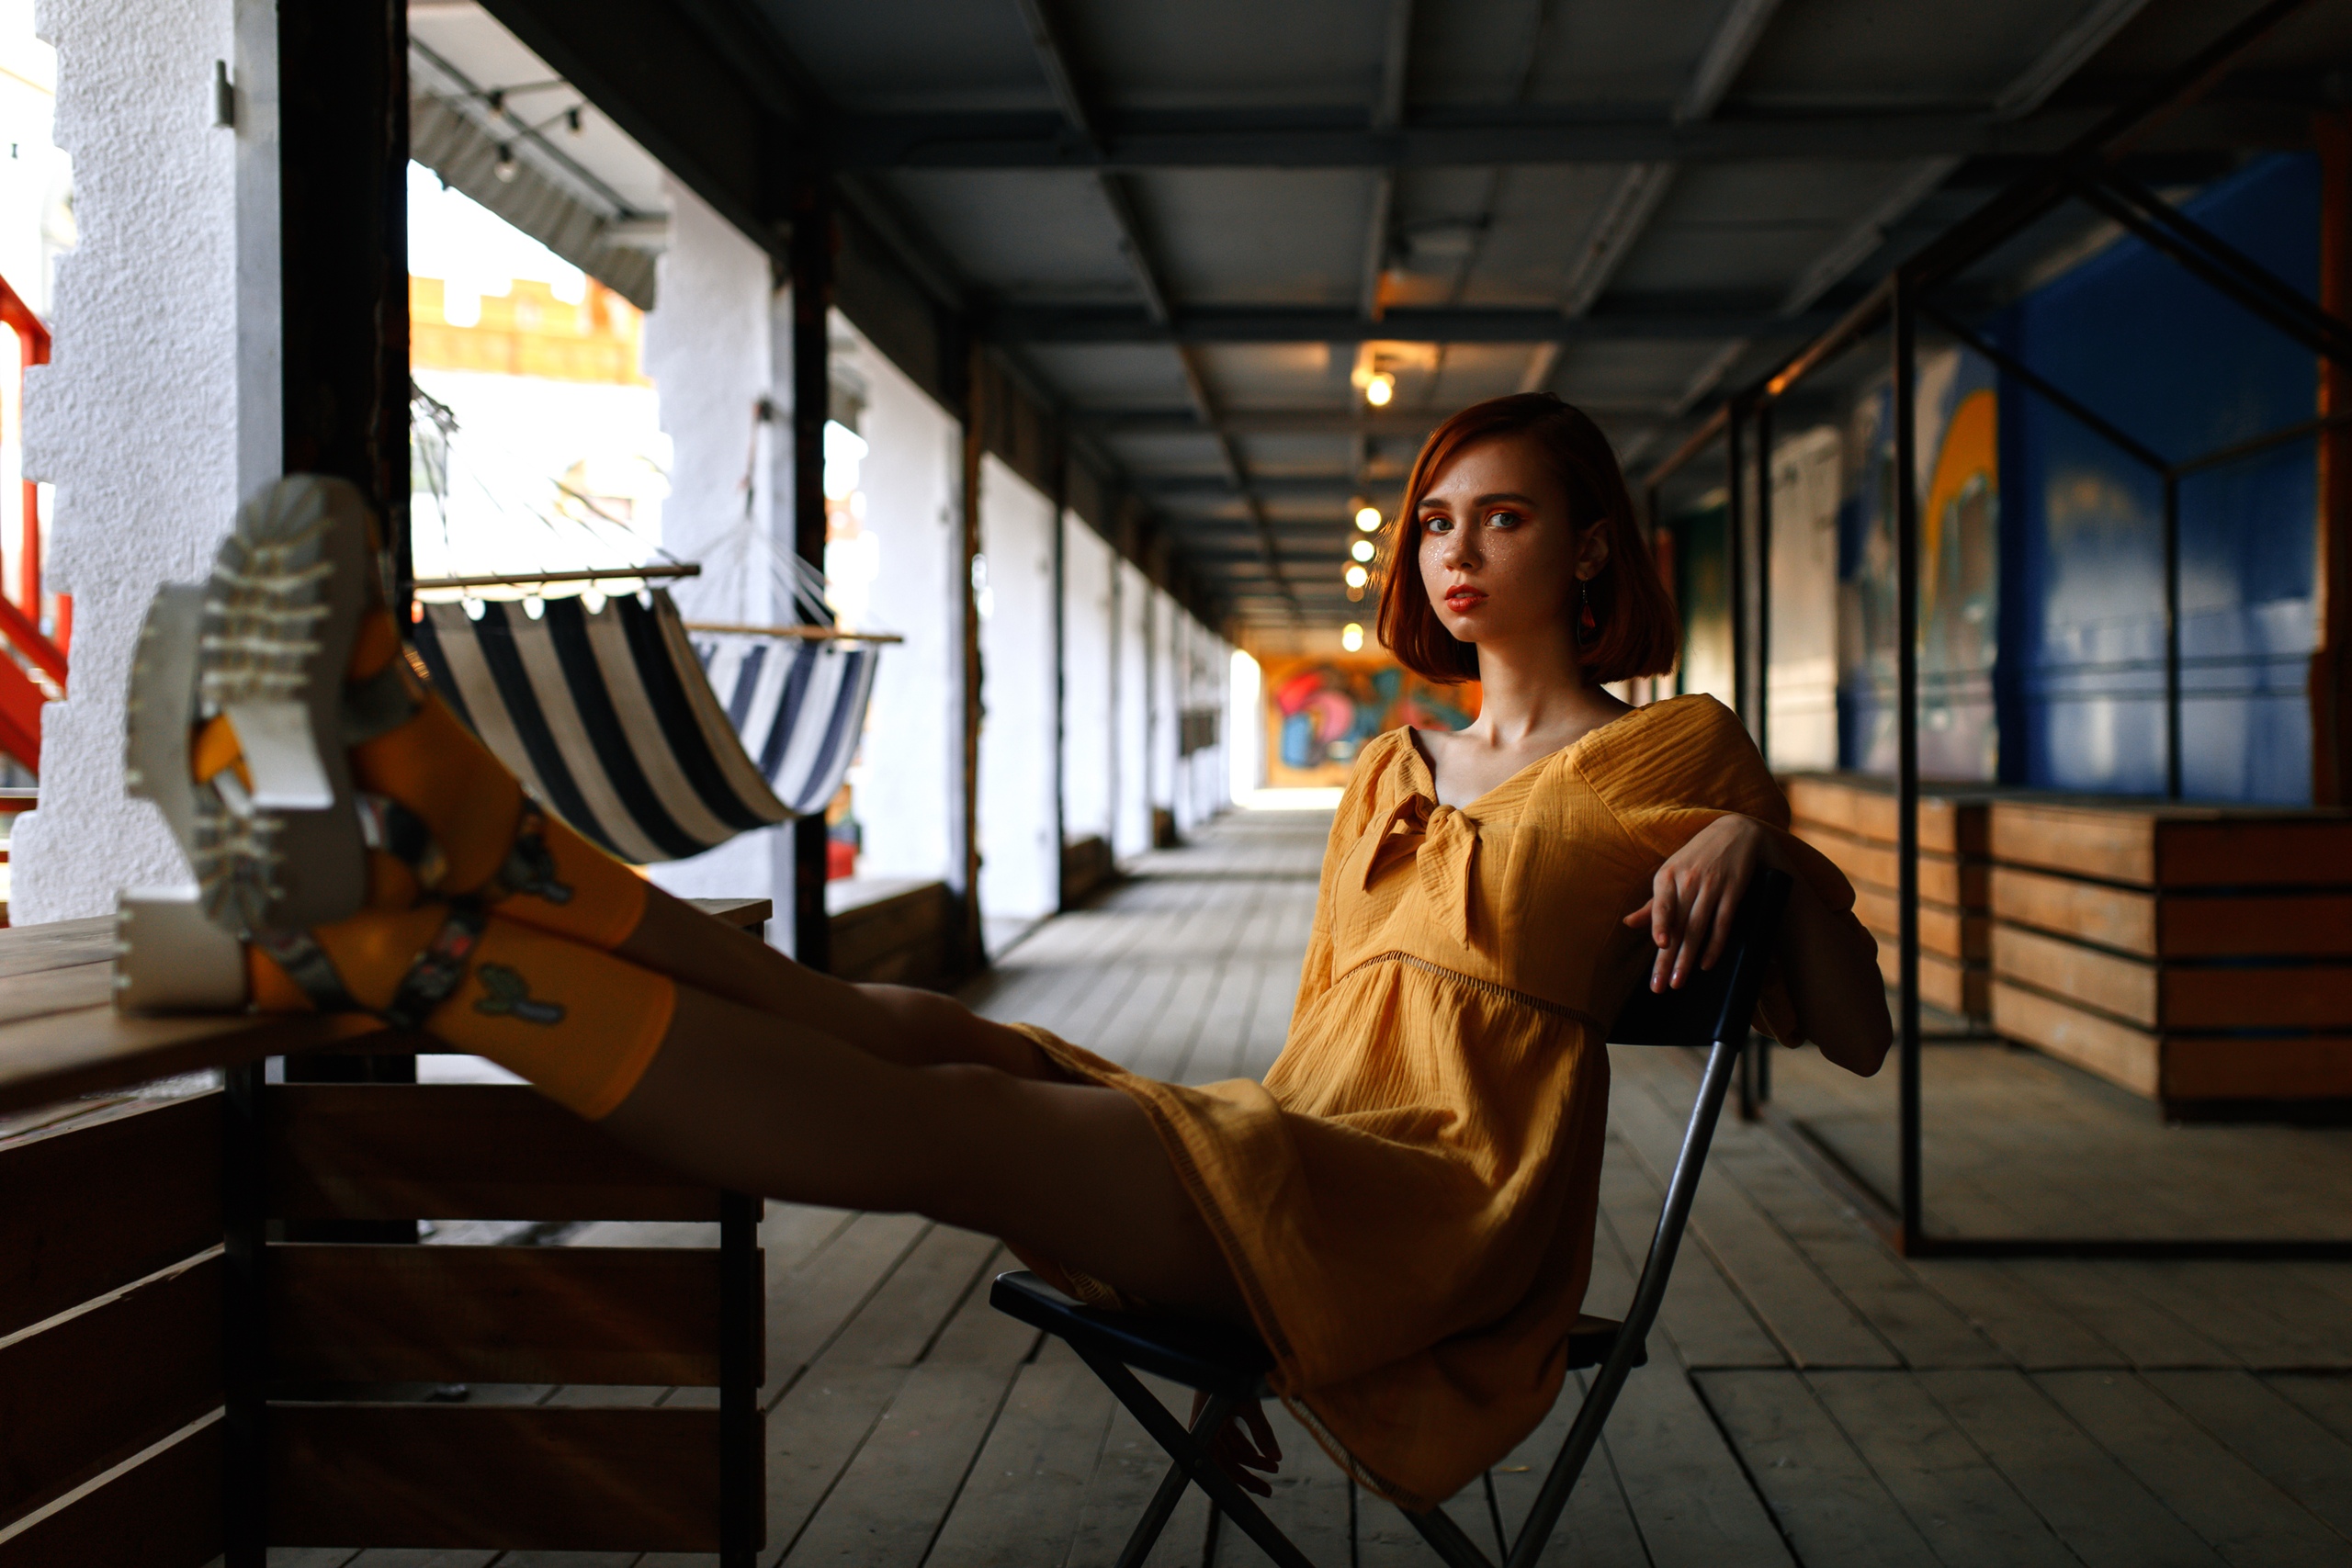 Valeriya Ranevskaya Mikhail Shvetsov Boots Legs Redhead Dress Sitting Looking At Viewer Women Model 2560x1707